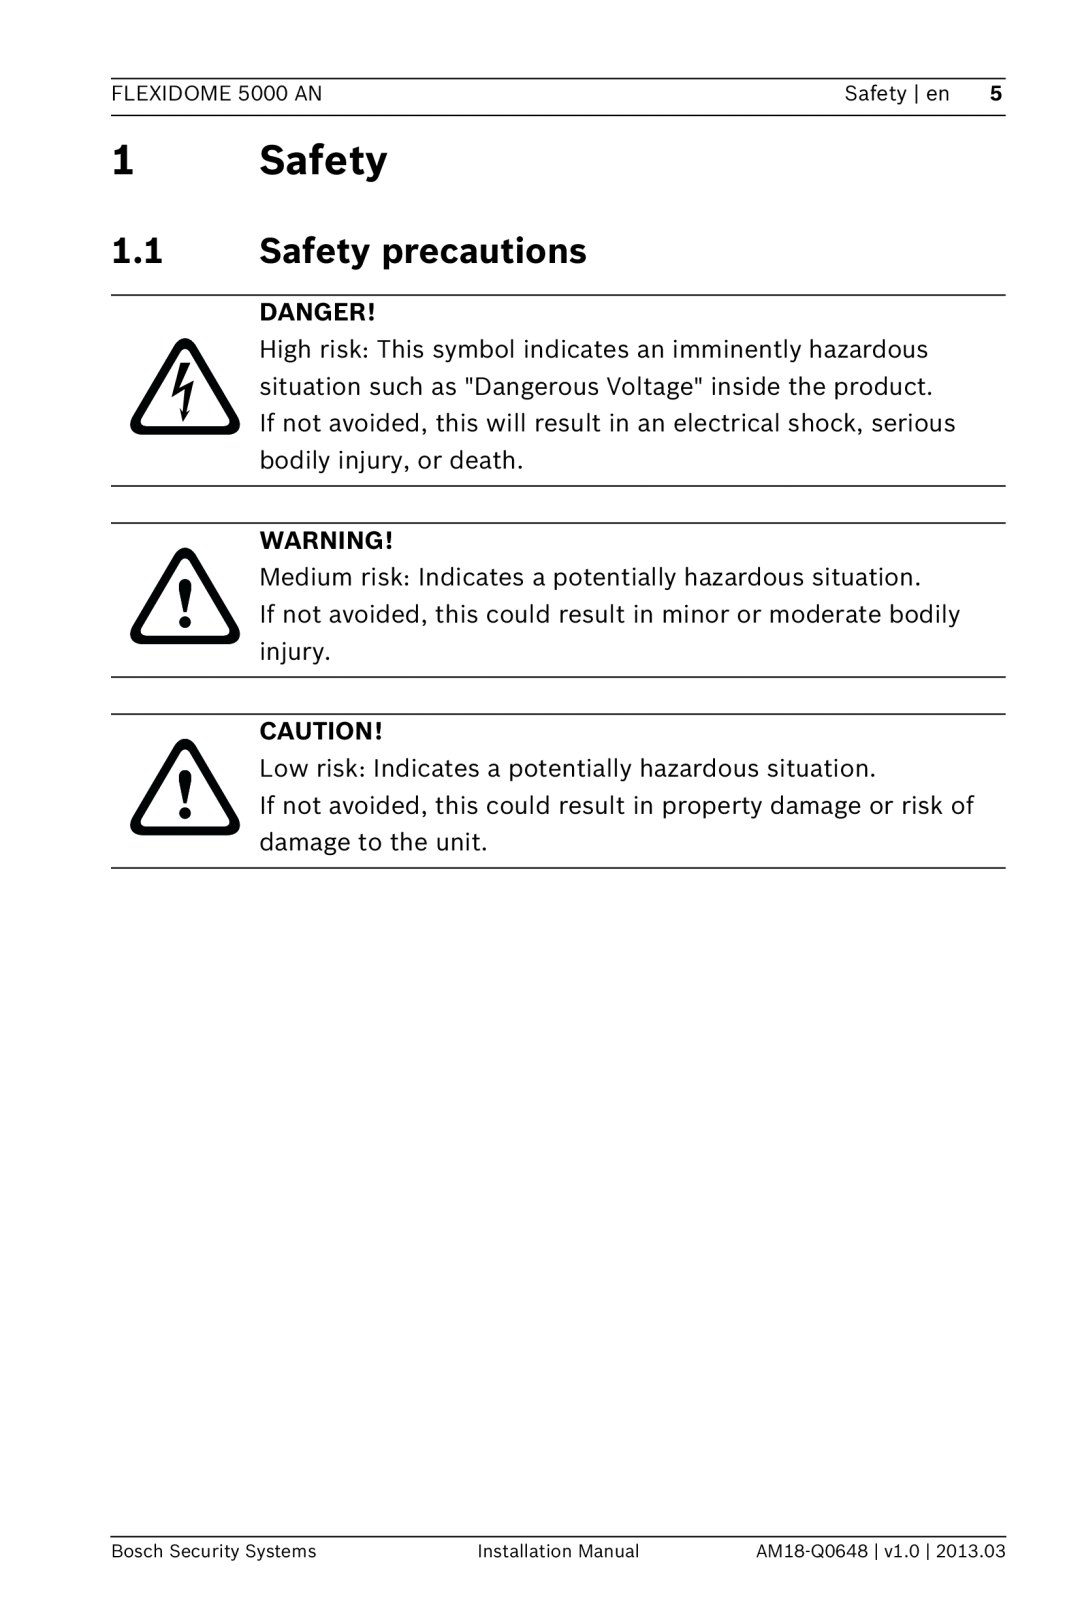 Bosch Appliances AN, 5000 installation manual 1.1Safety precautions, Danger 